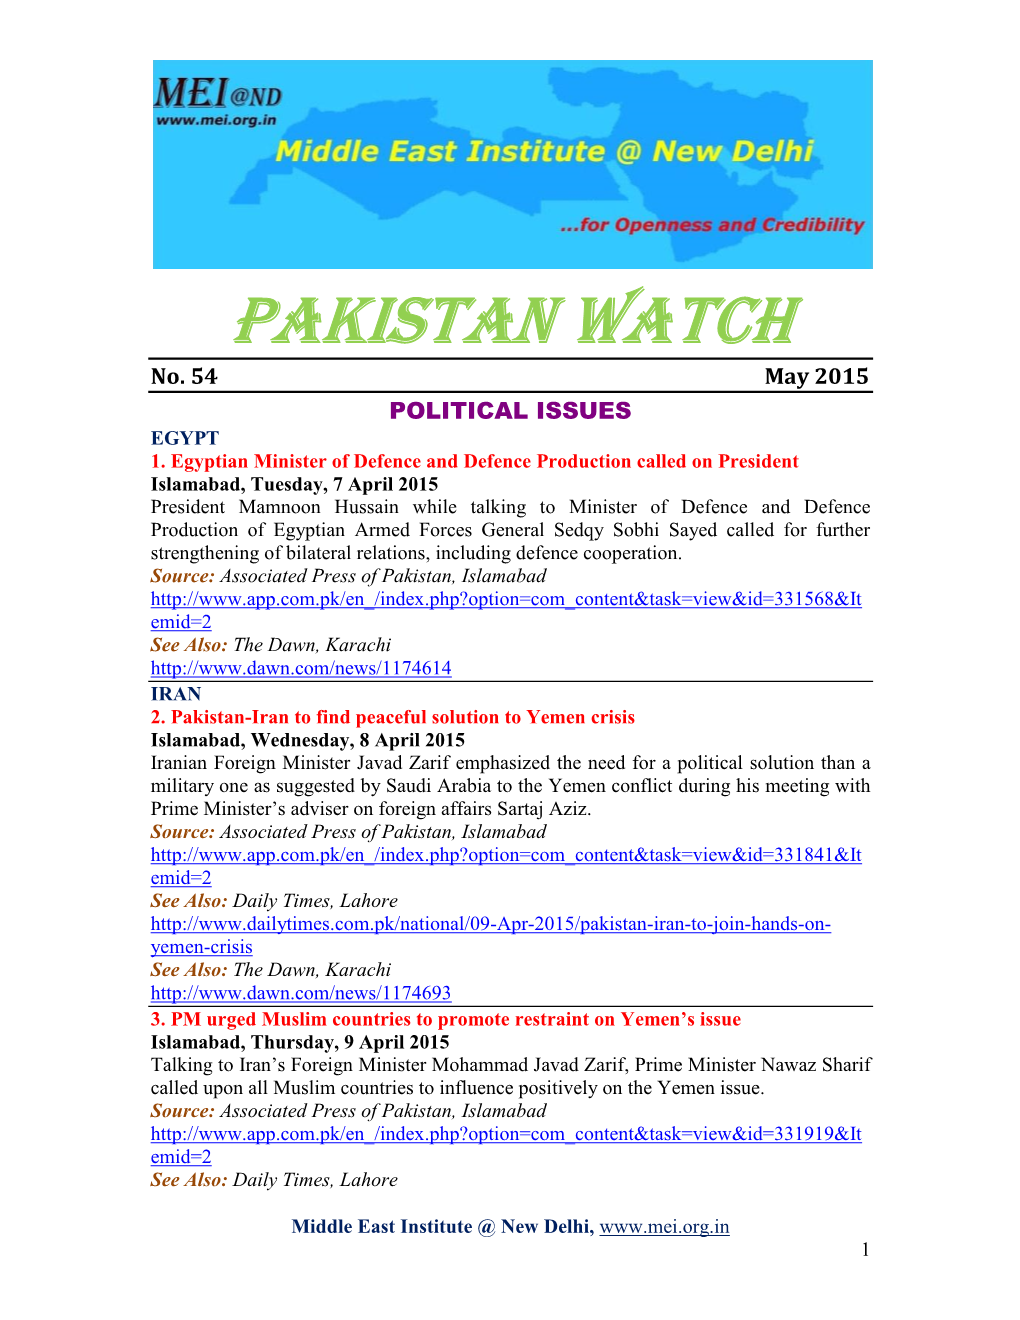 Pakistan Watch No